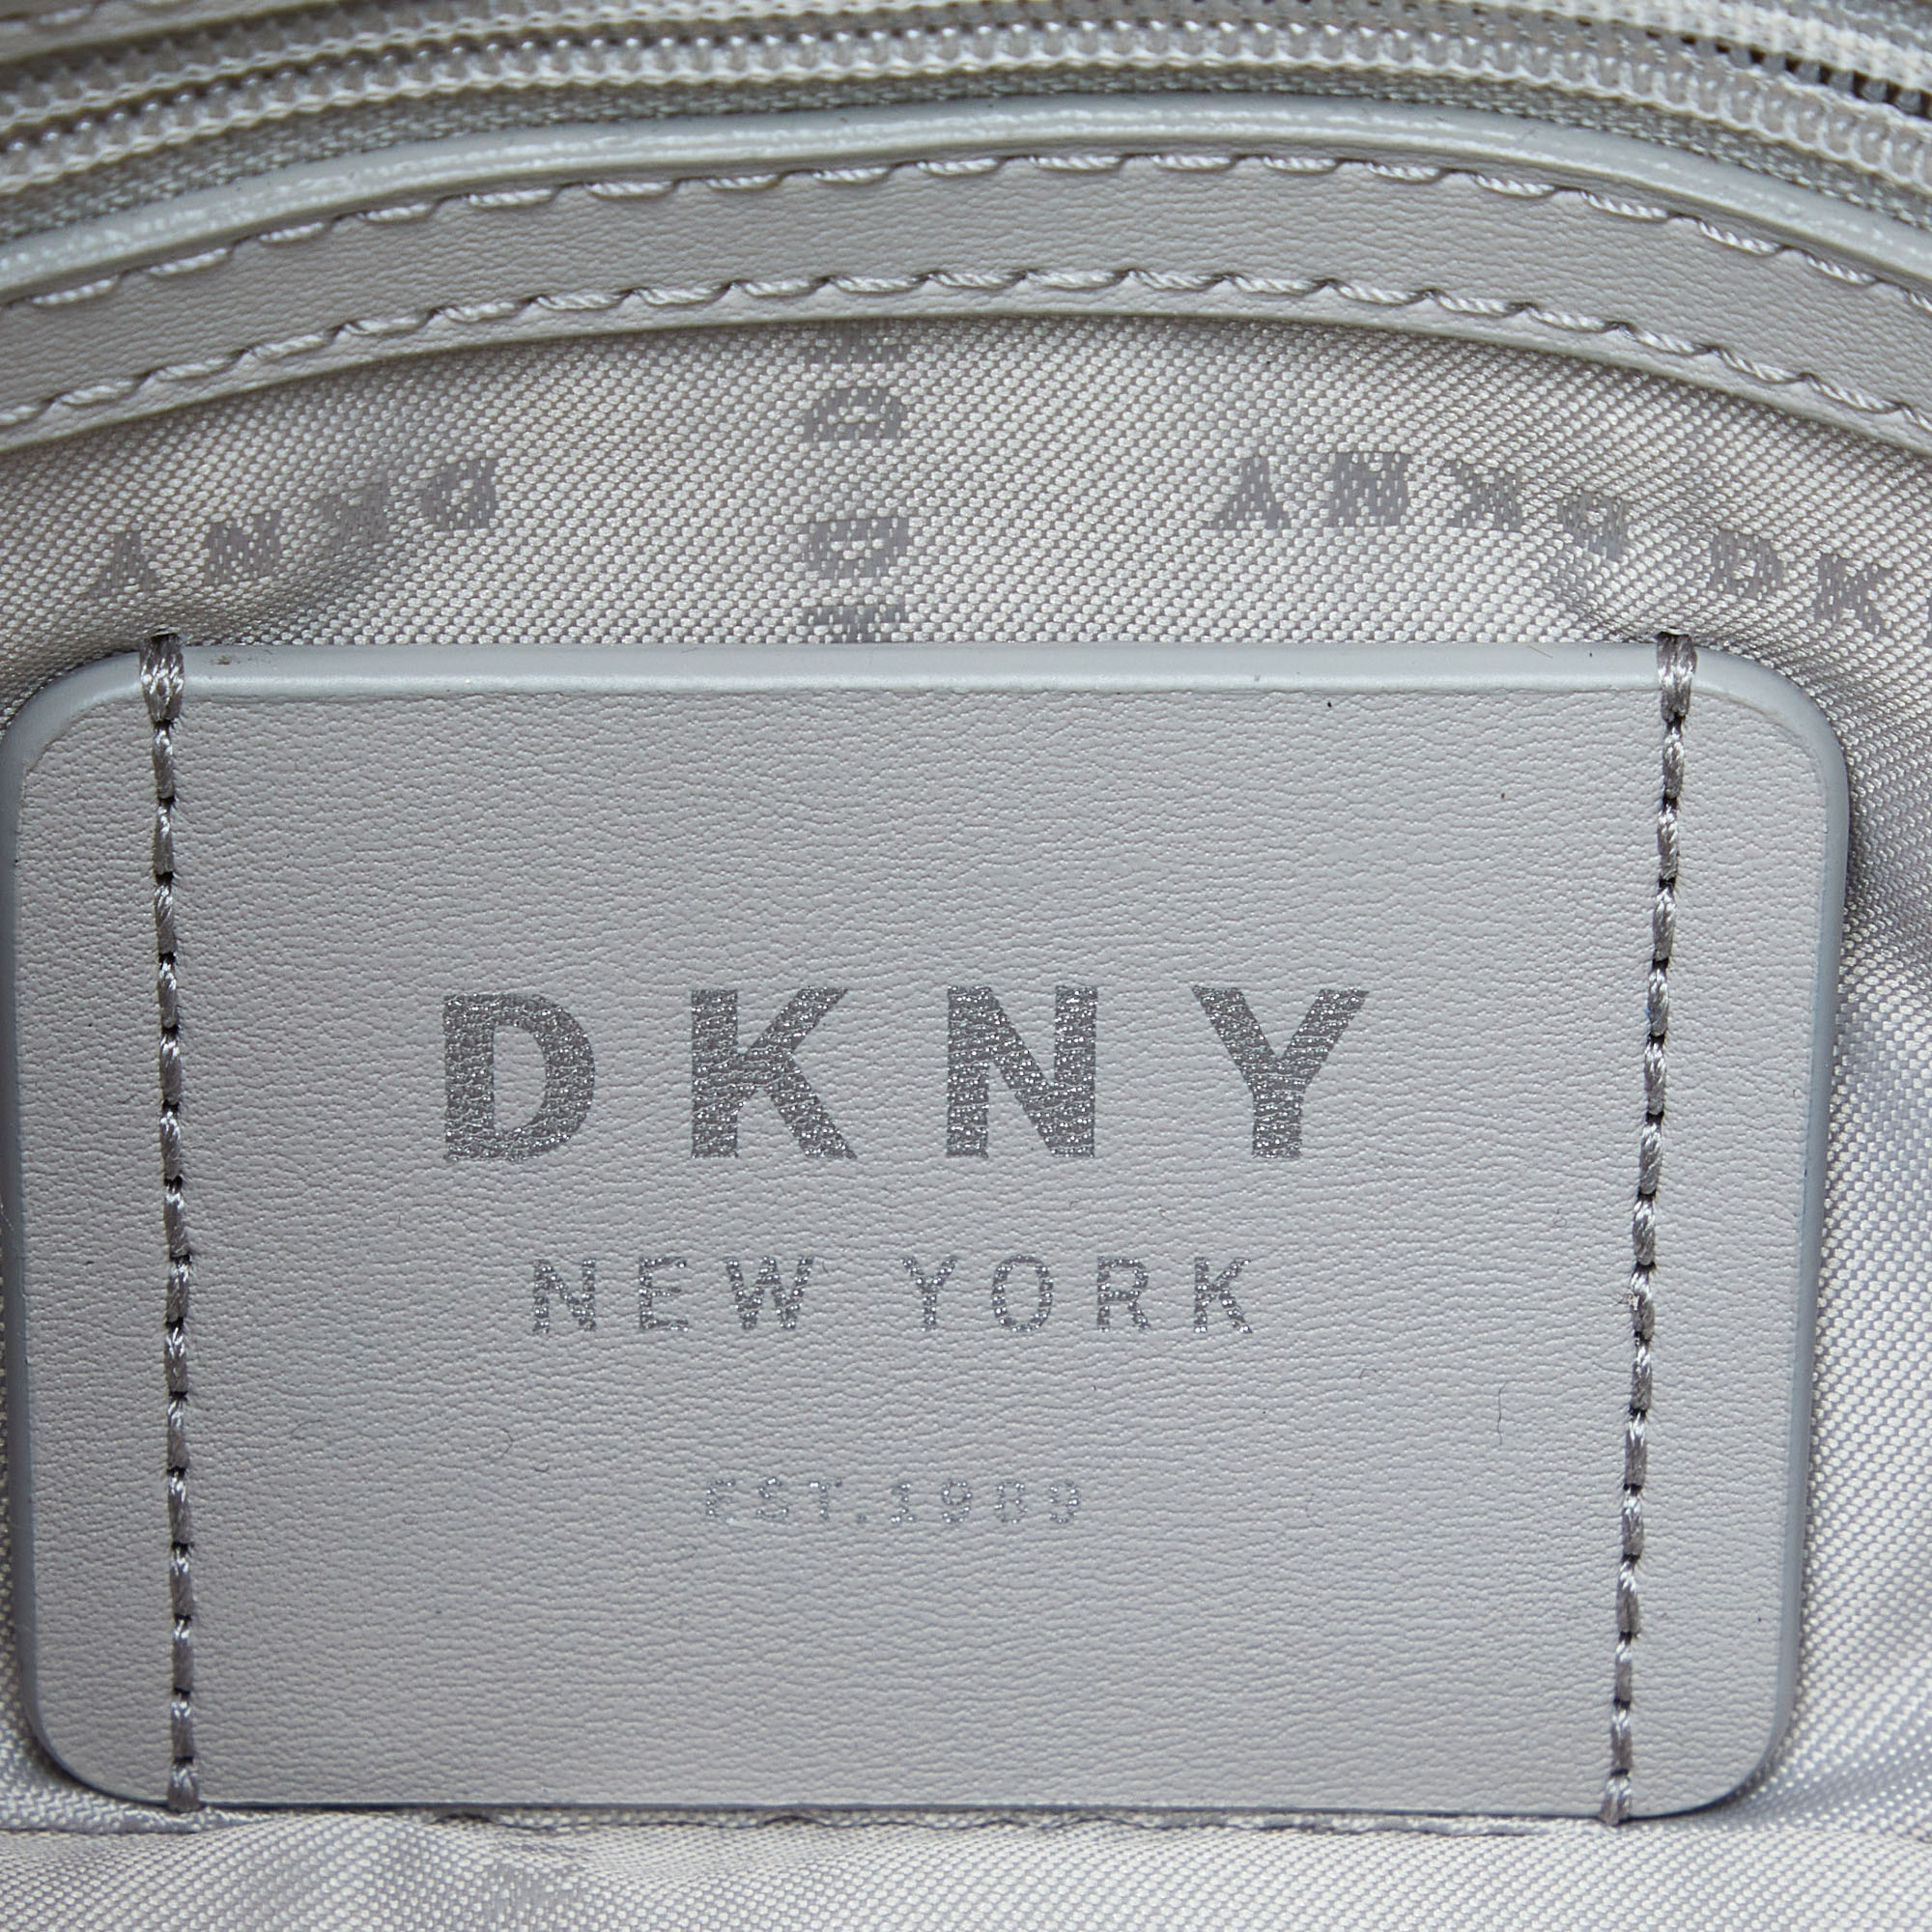 DKNY White/Black Graffiti Print Leather Flap Shoulder Bag